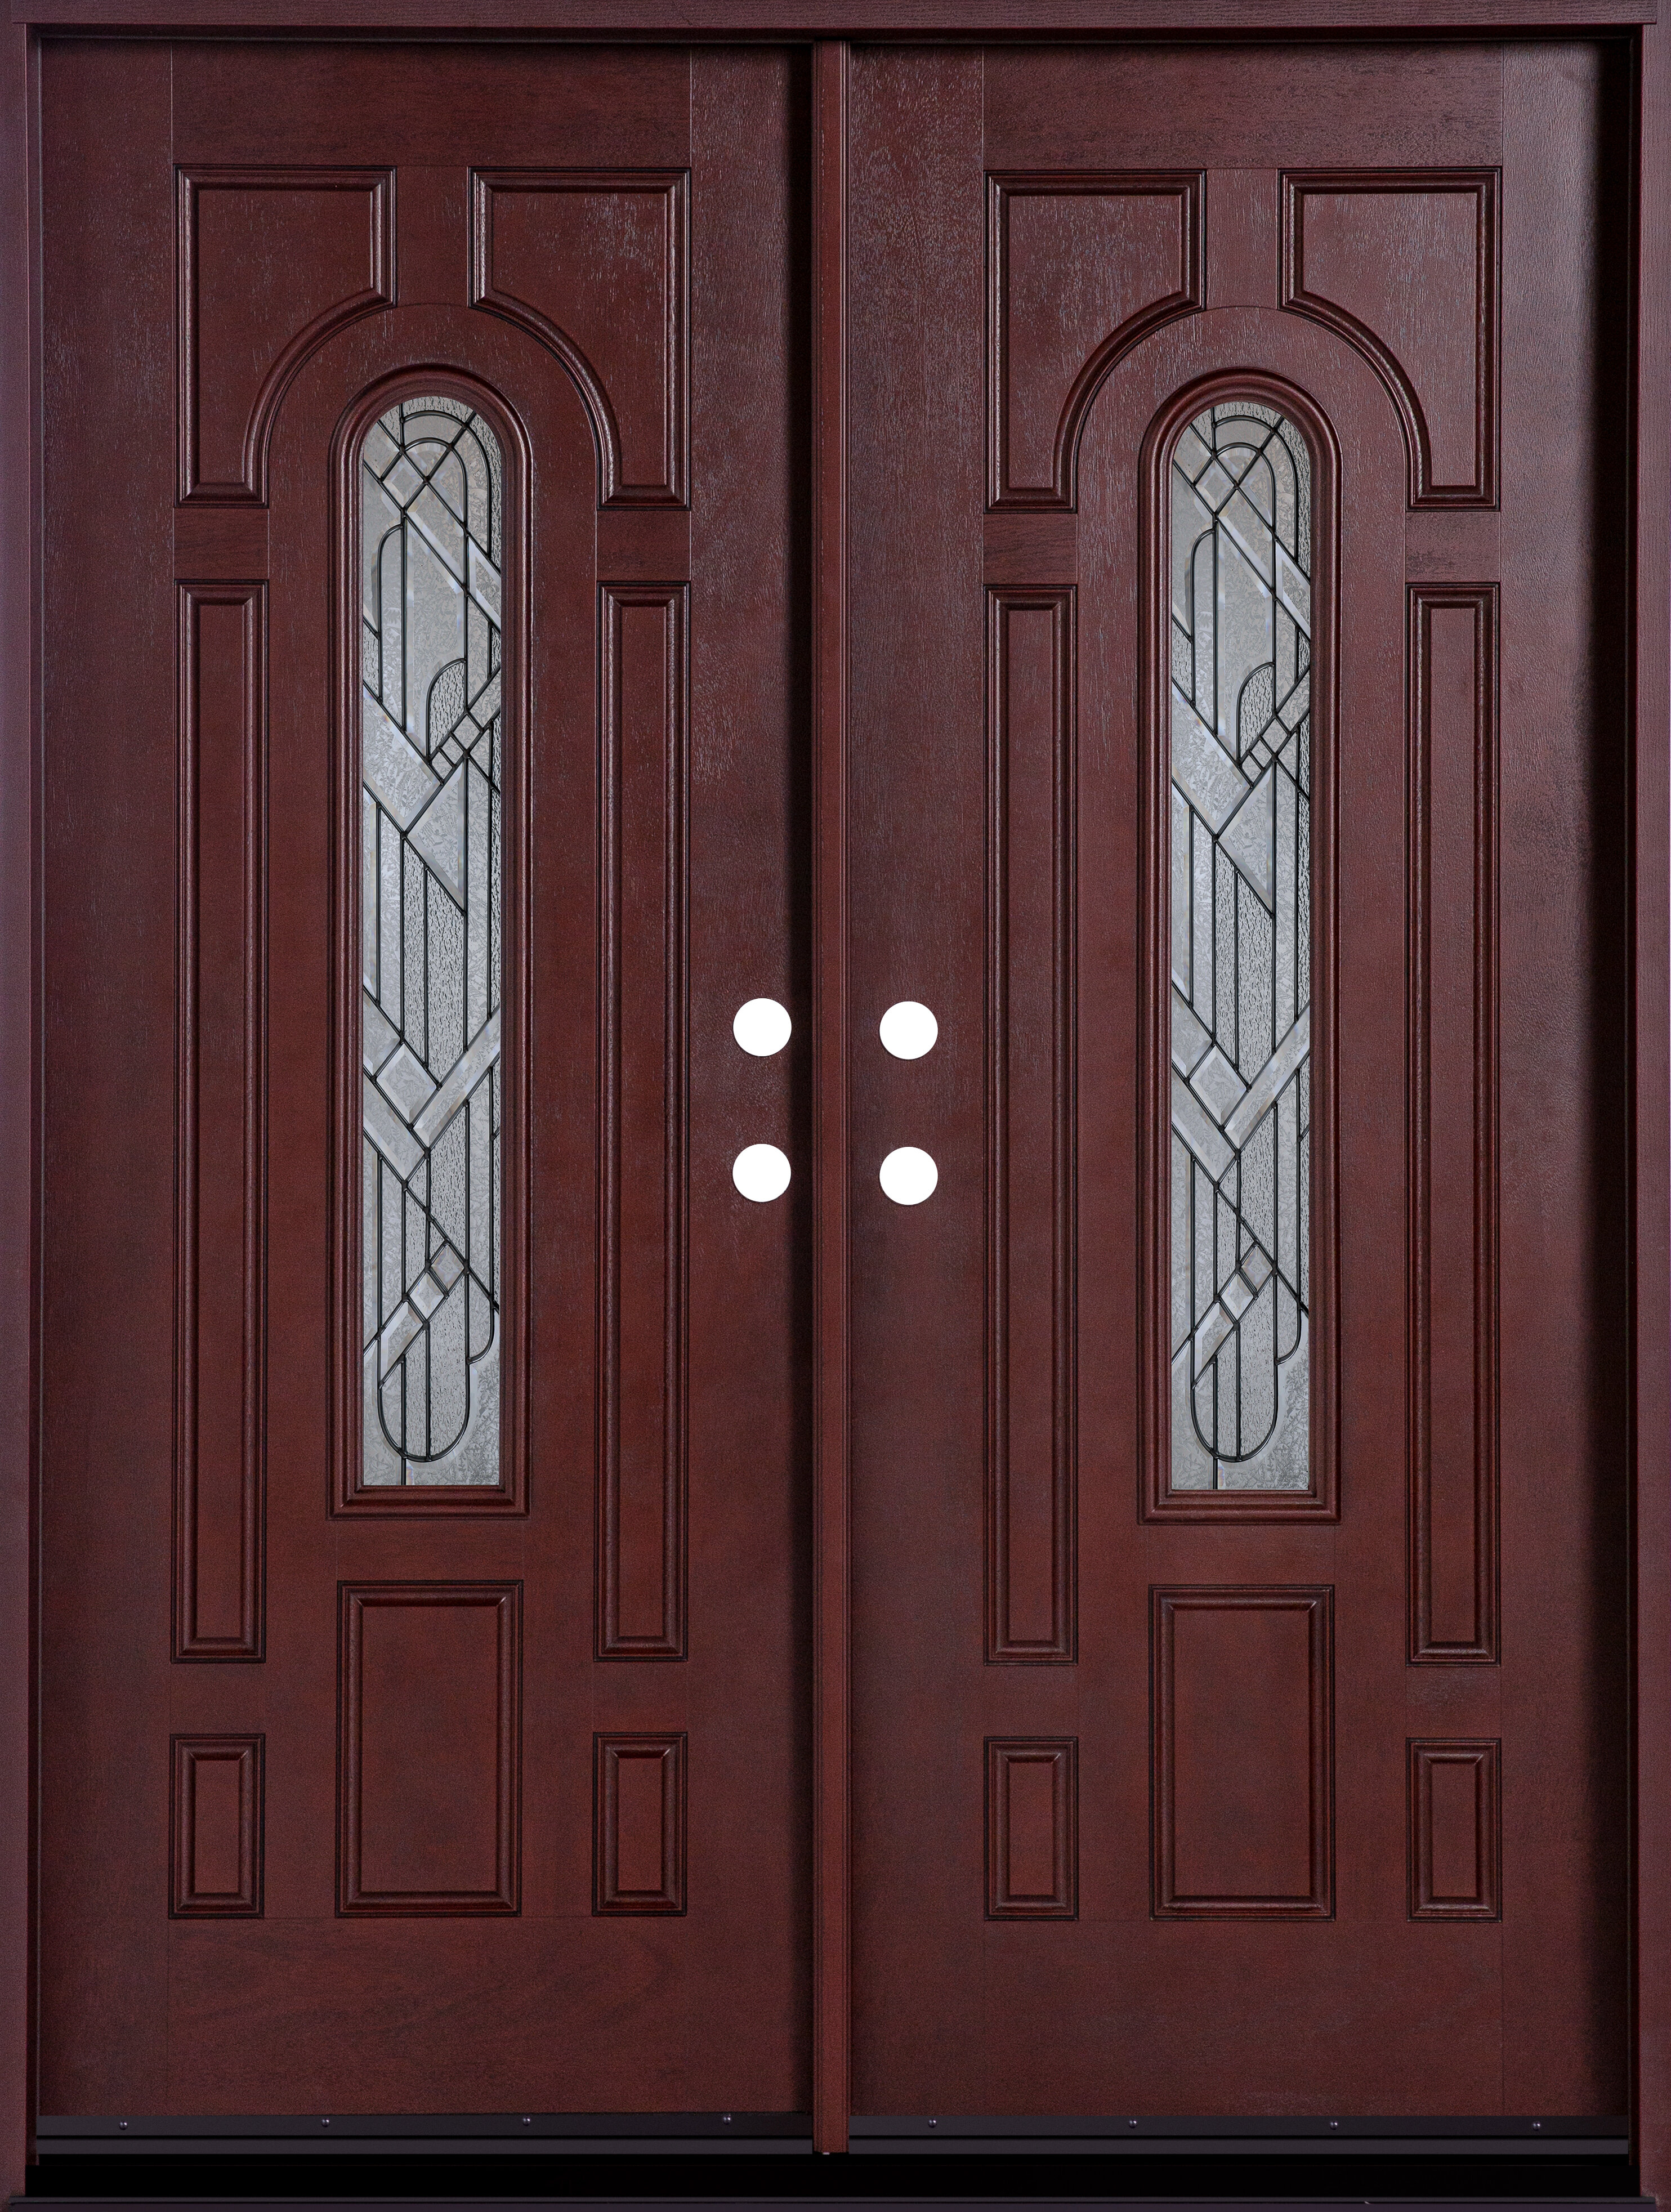 Door Destination 80'' Paneled Fiberglass Front Entry Doors & Reviews